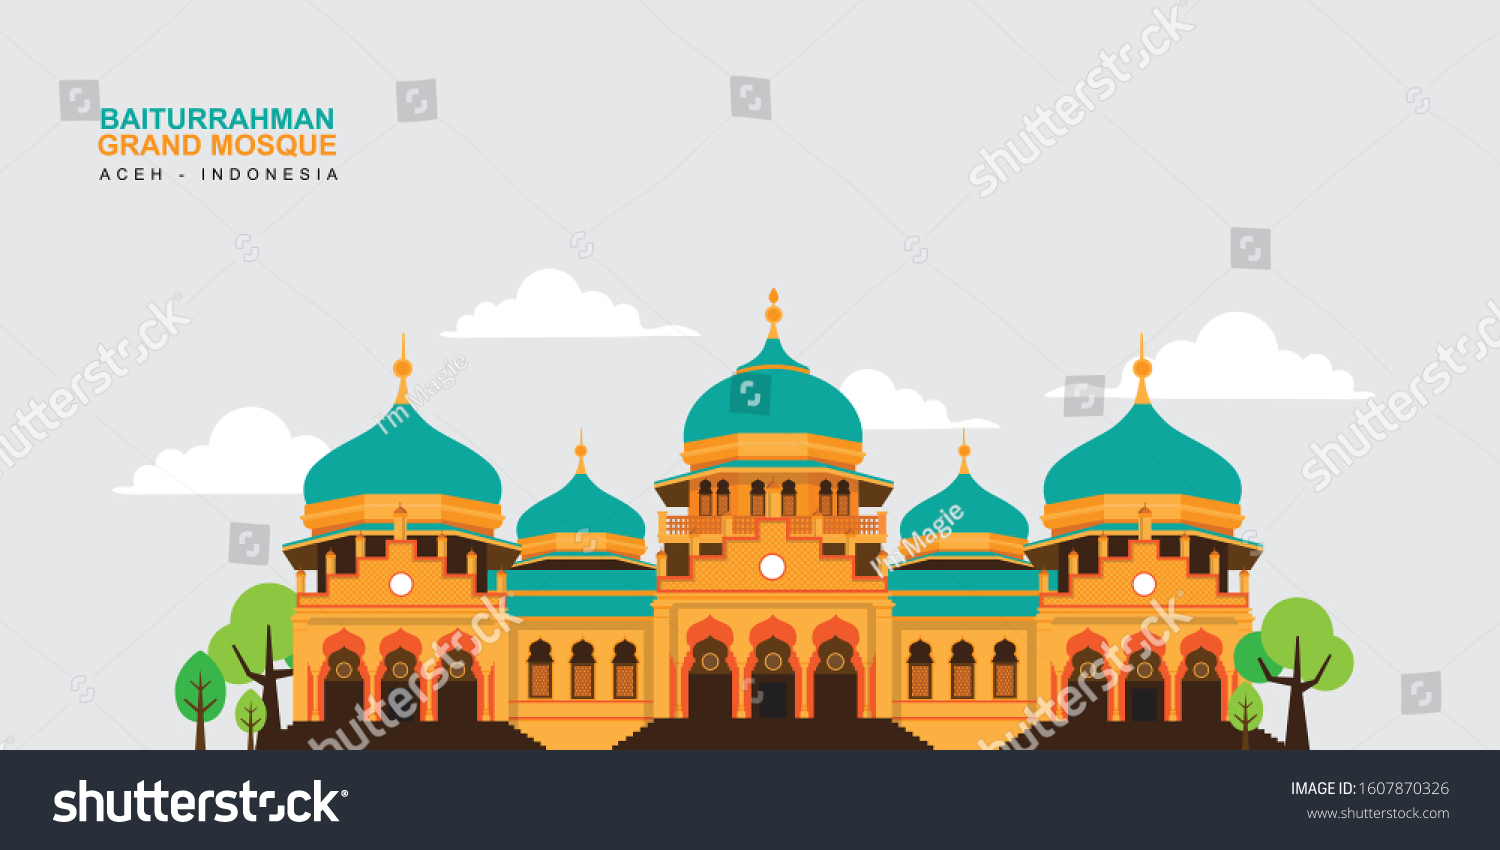 SVG of baiturrahman mosque illustration, aceh indonesia. this is iconic mosque in aceh indonesia. svg